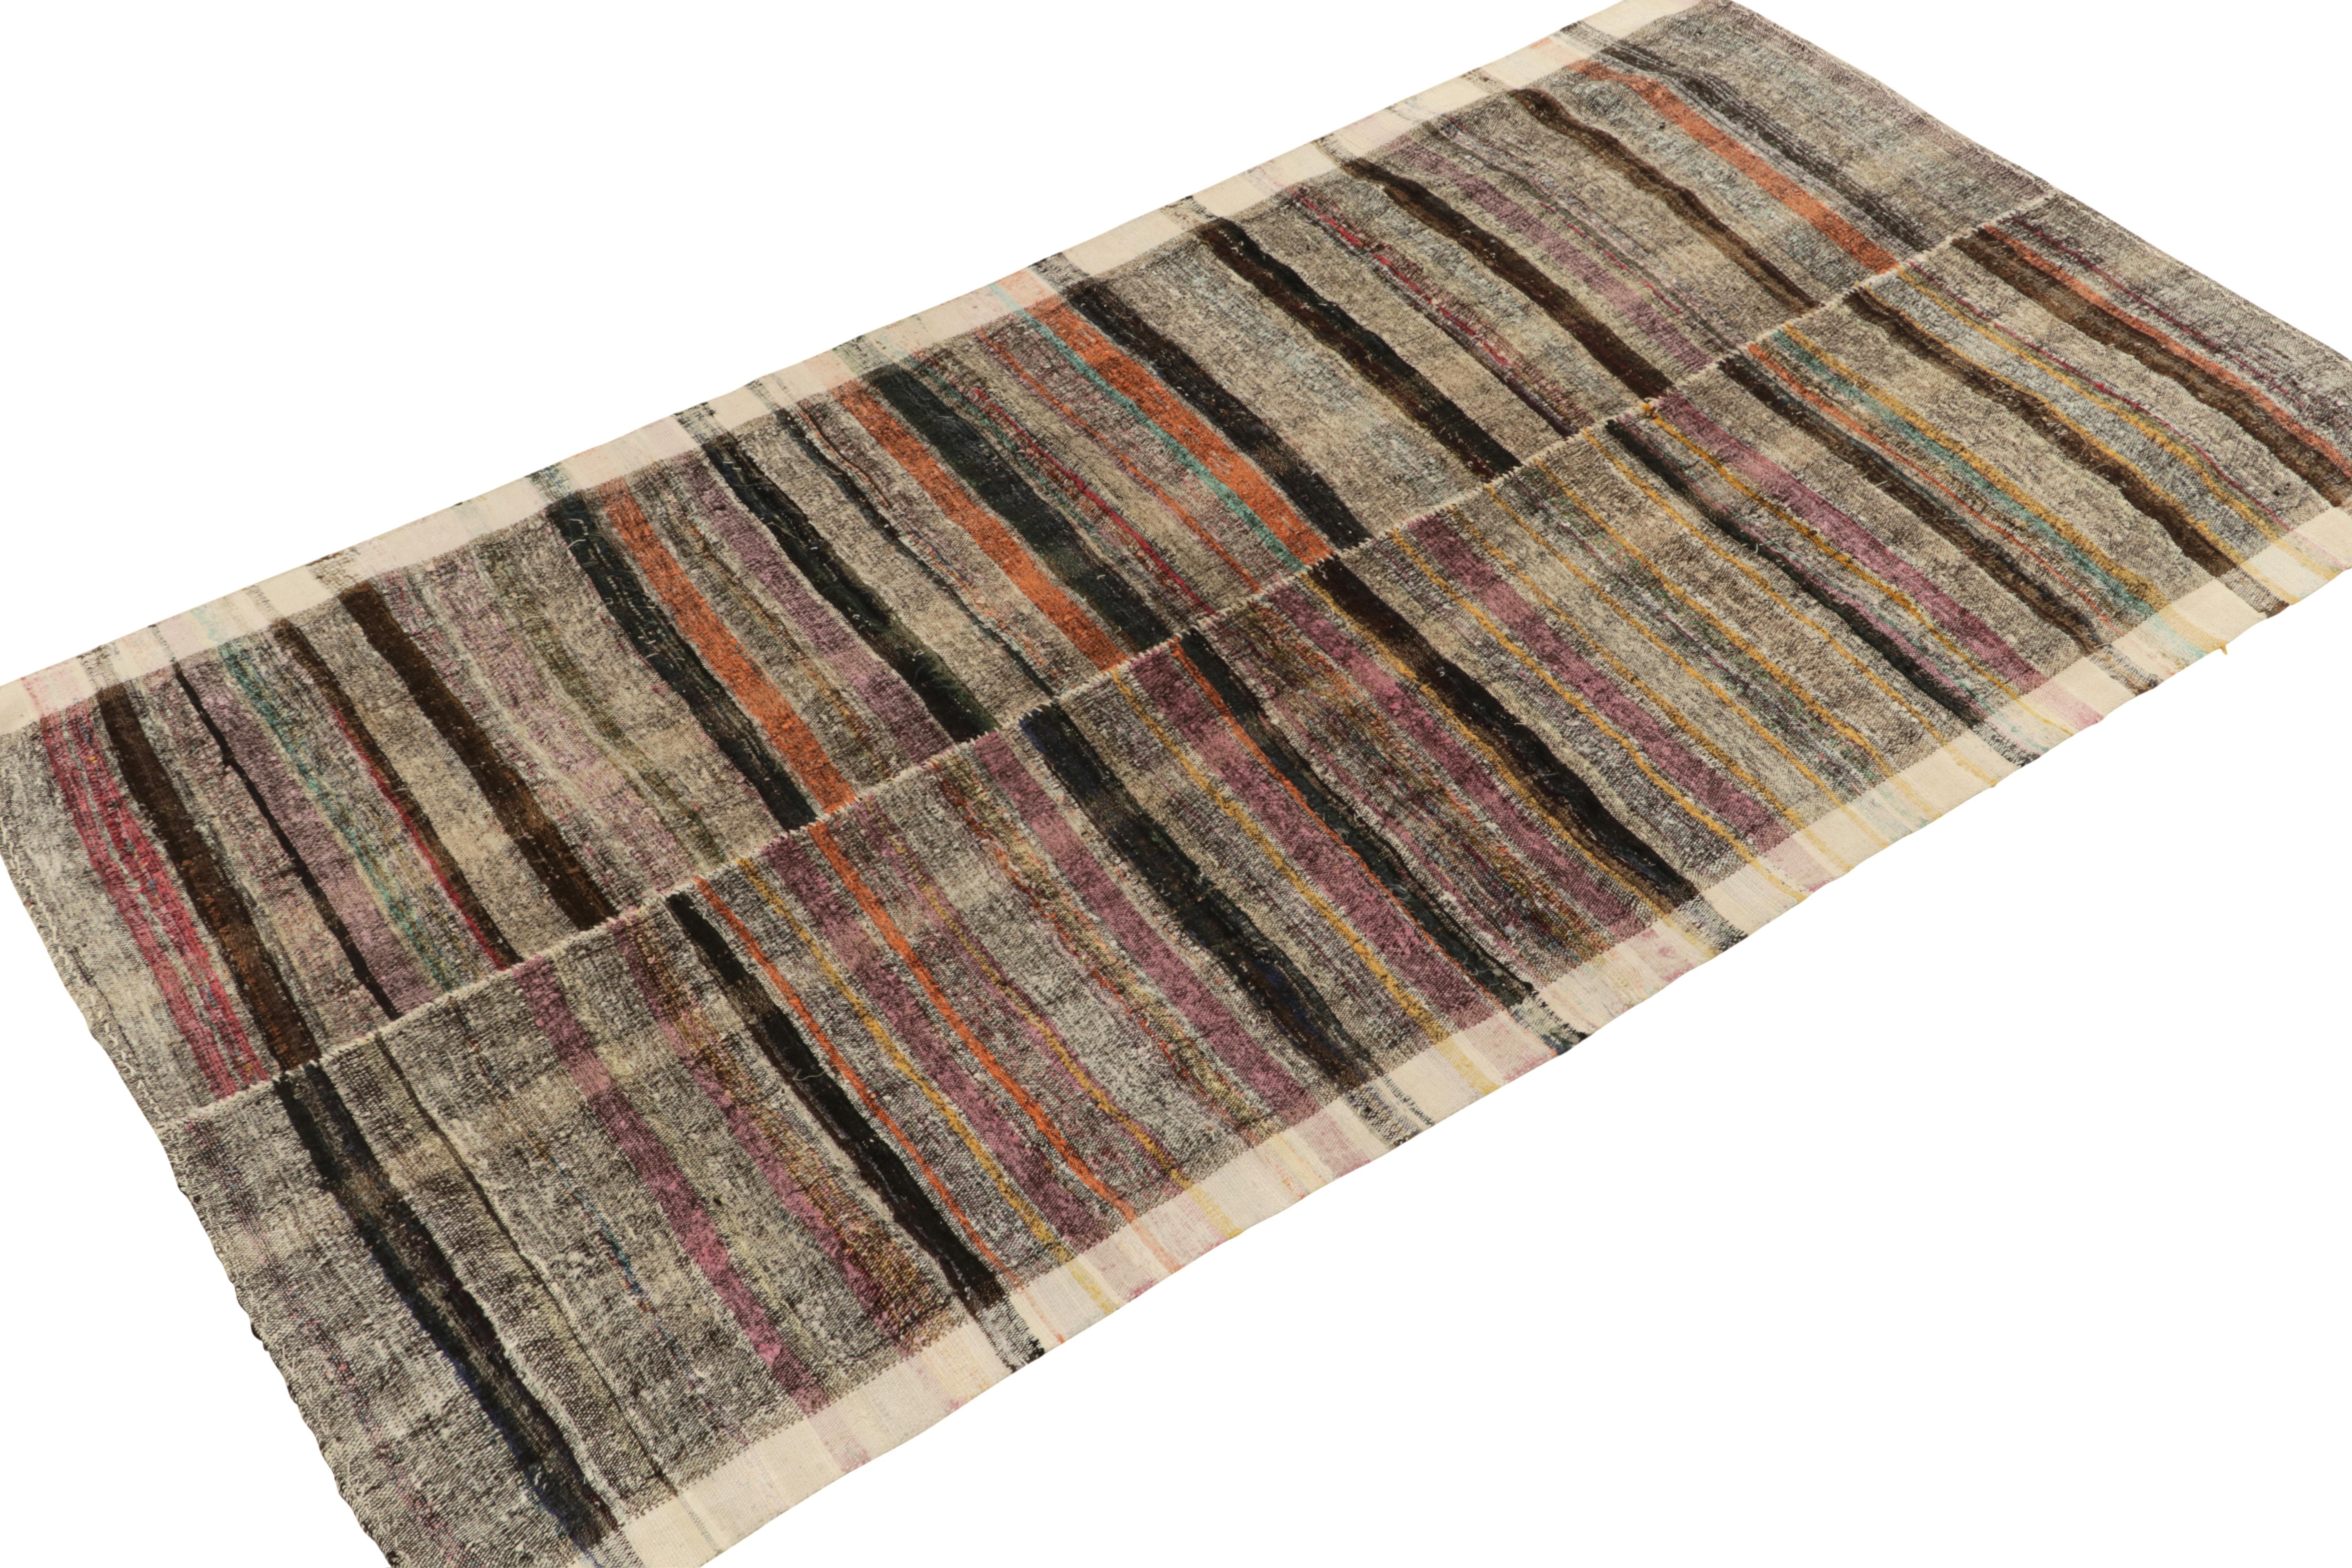 Modern 1950s Vintage Turkish Kilim Rug in Panel Style Stripe Patterns by Rug & Kilim For Sale